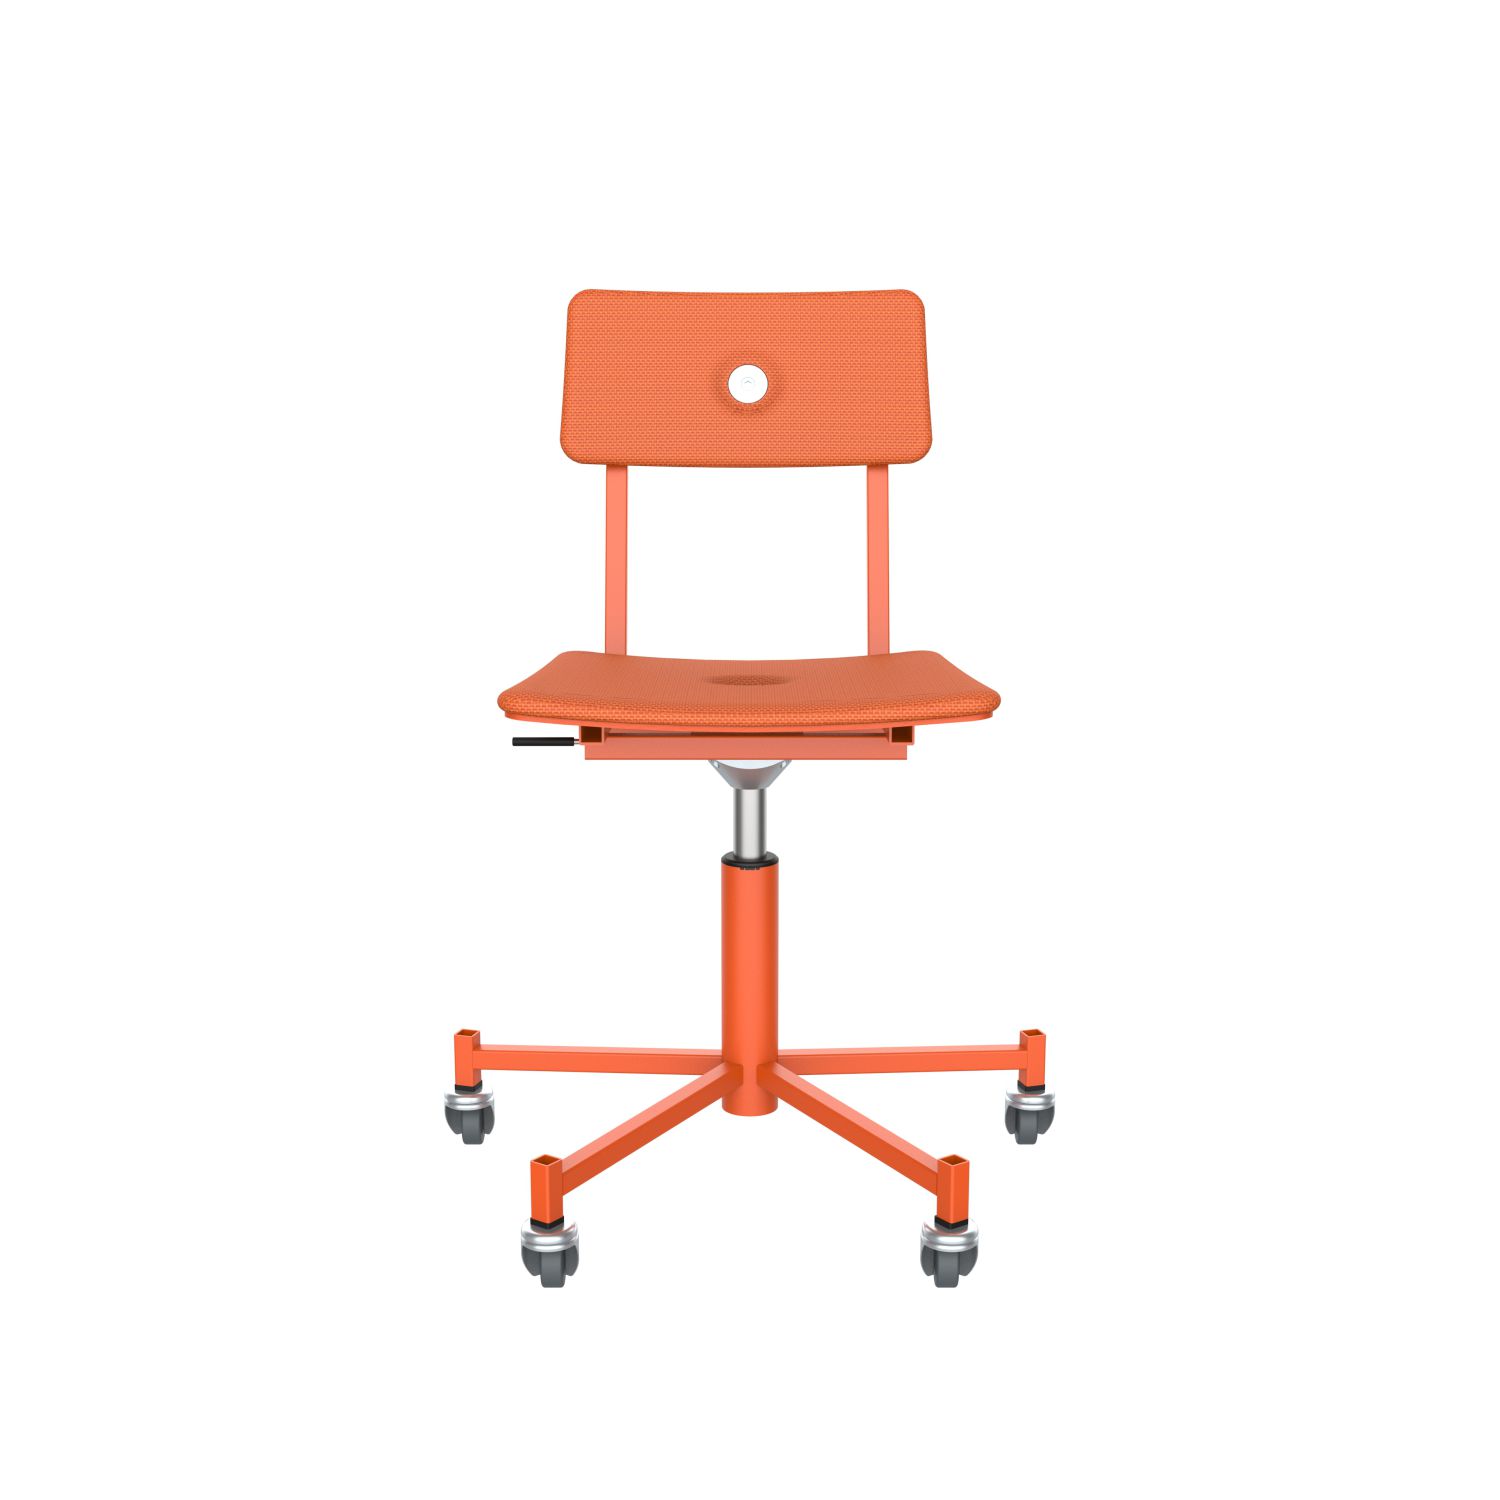 lensvelt piet hein eek mitw upholstered office chair without armrests burn orange 102 pure orange ral2004 with wheels